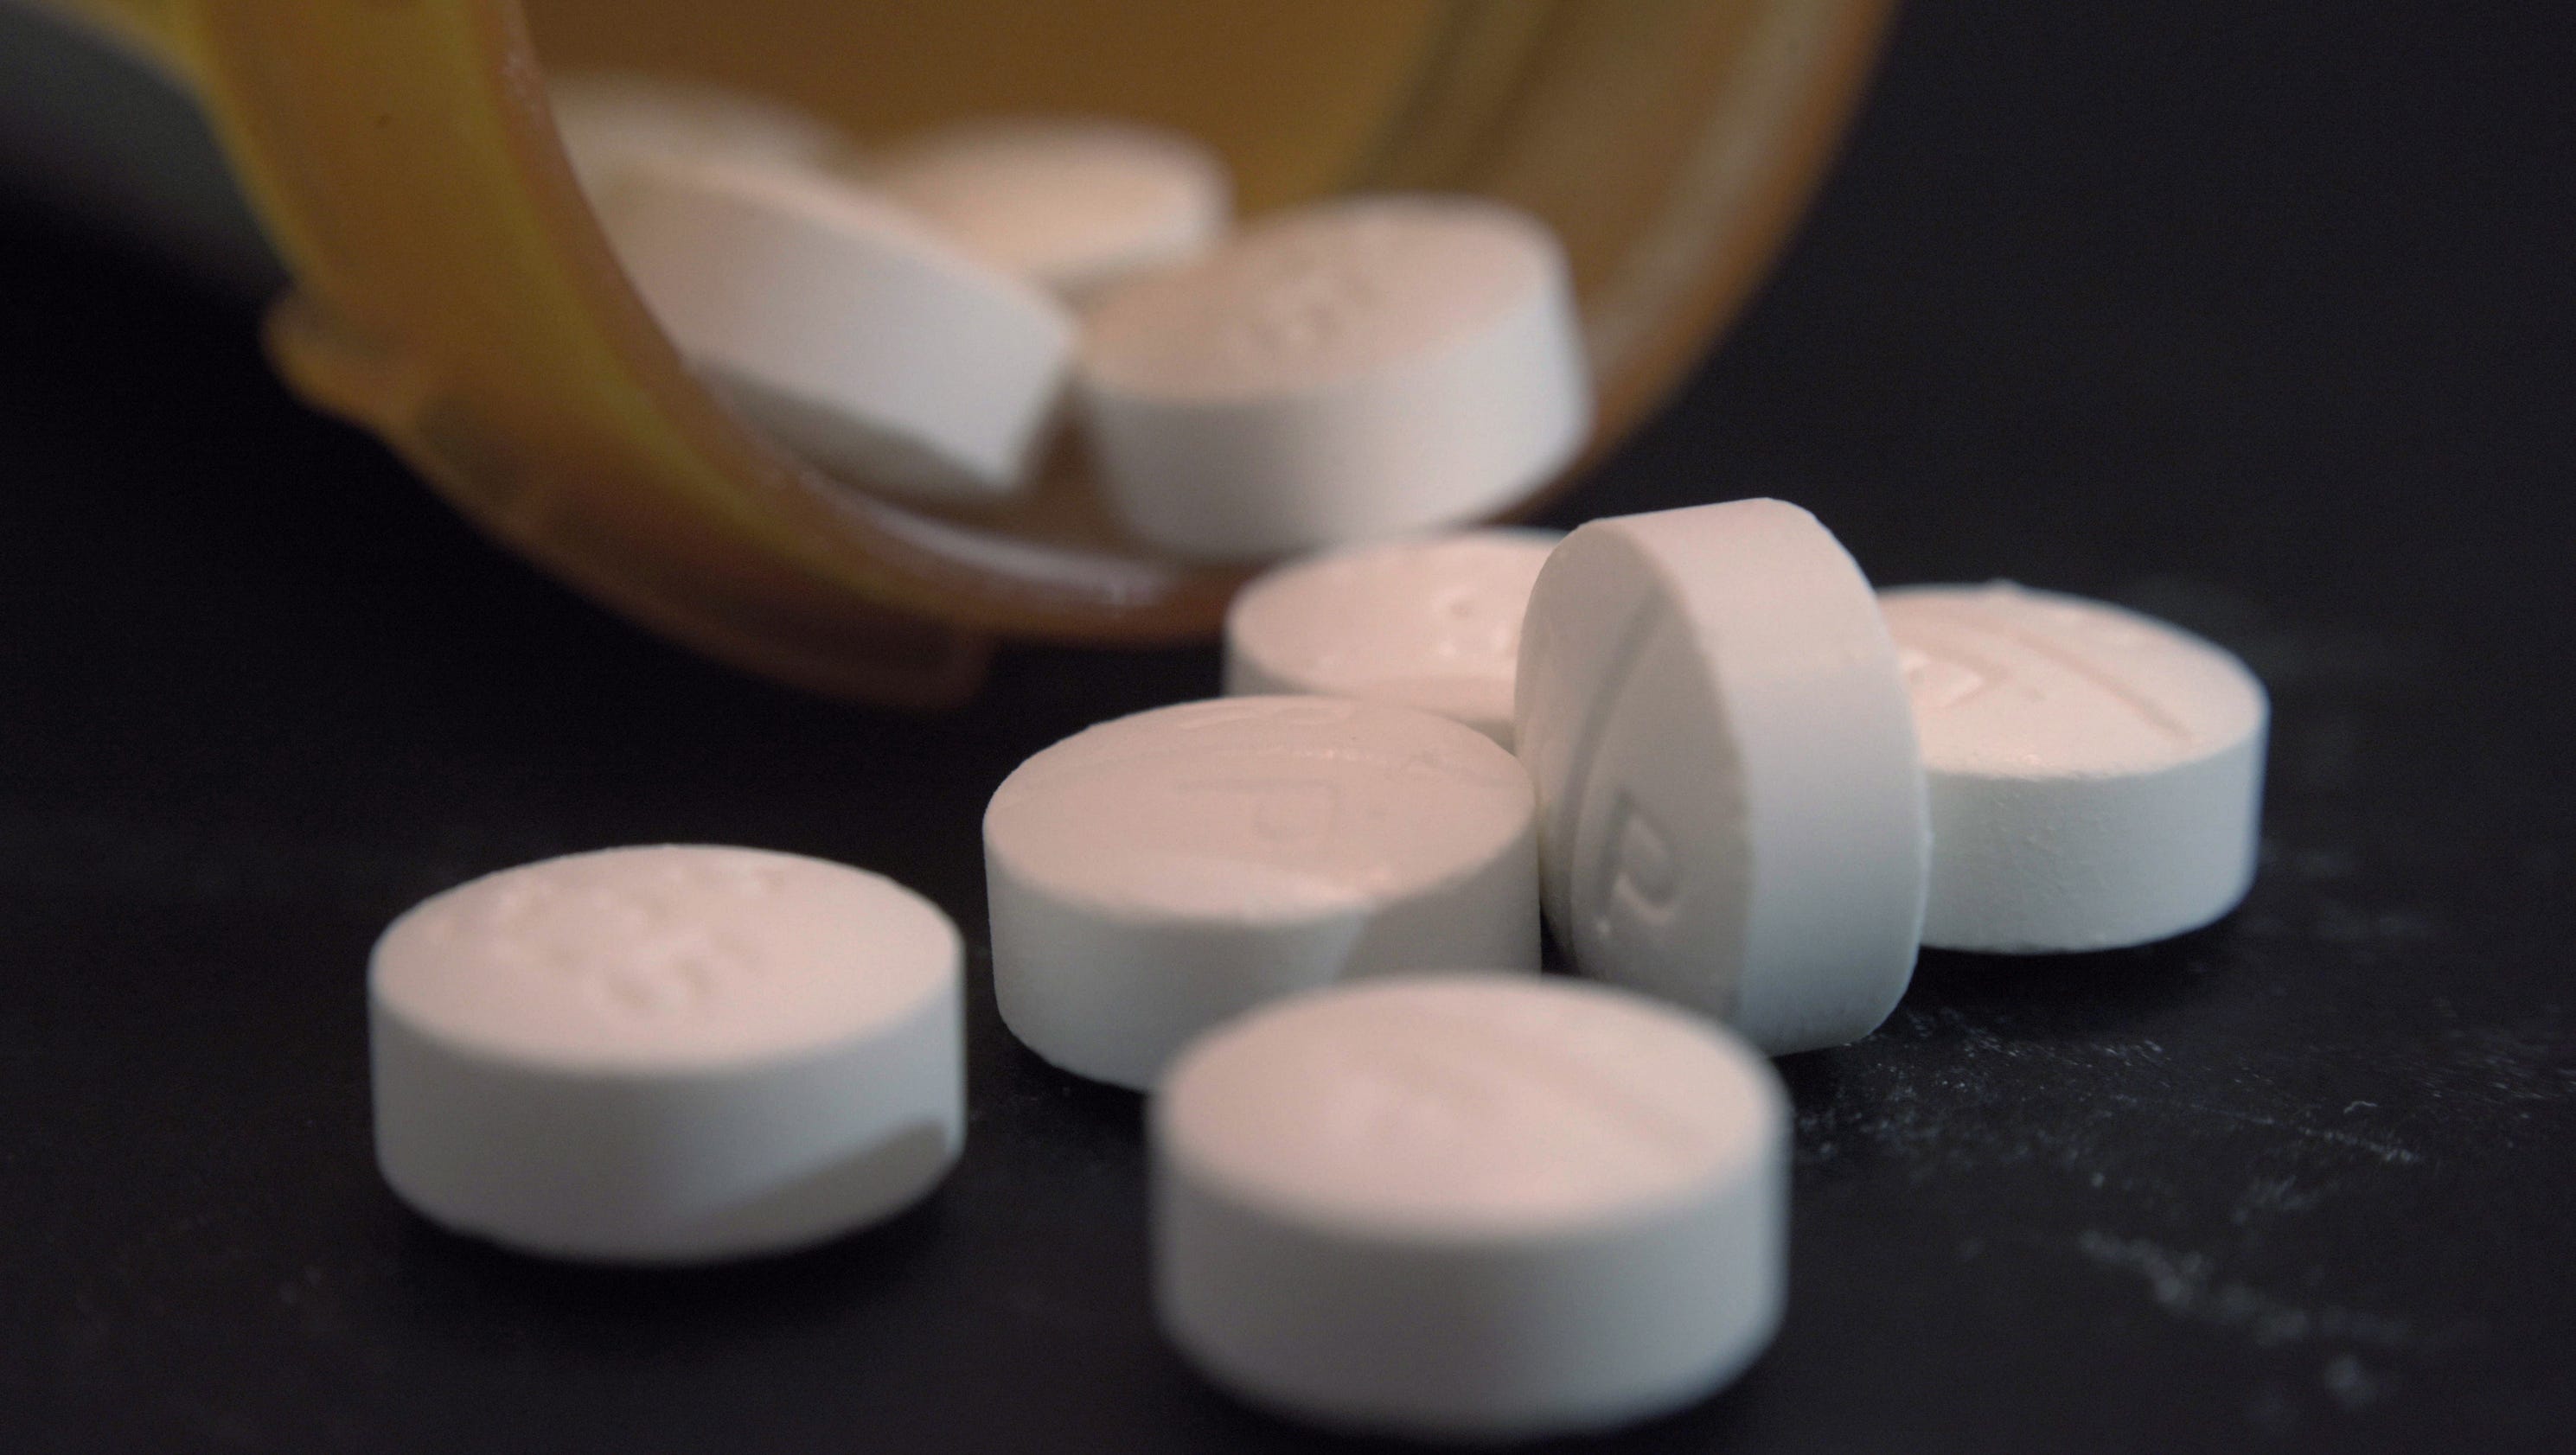 cvs-to-limit-opioid-drug-prescriptions-amid-national-epidemic